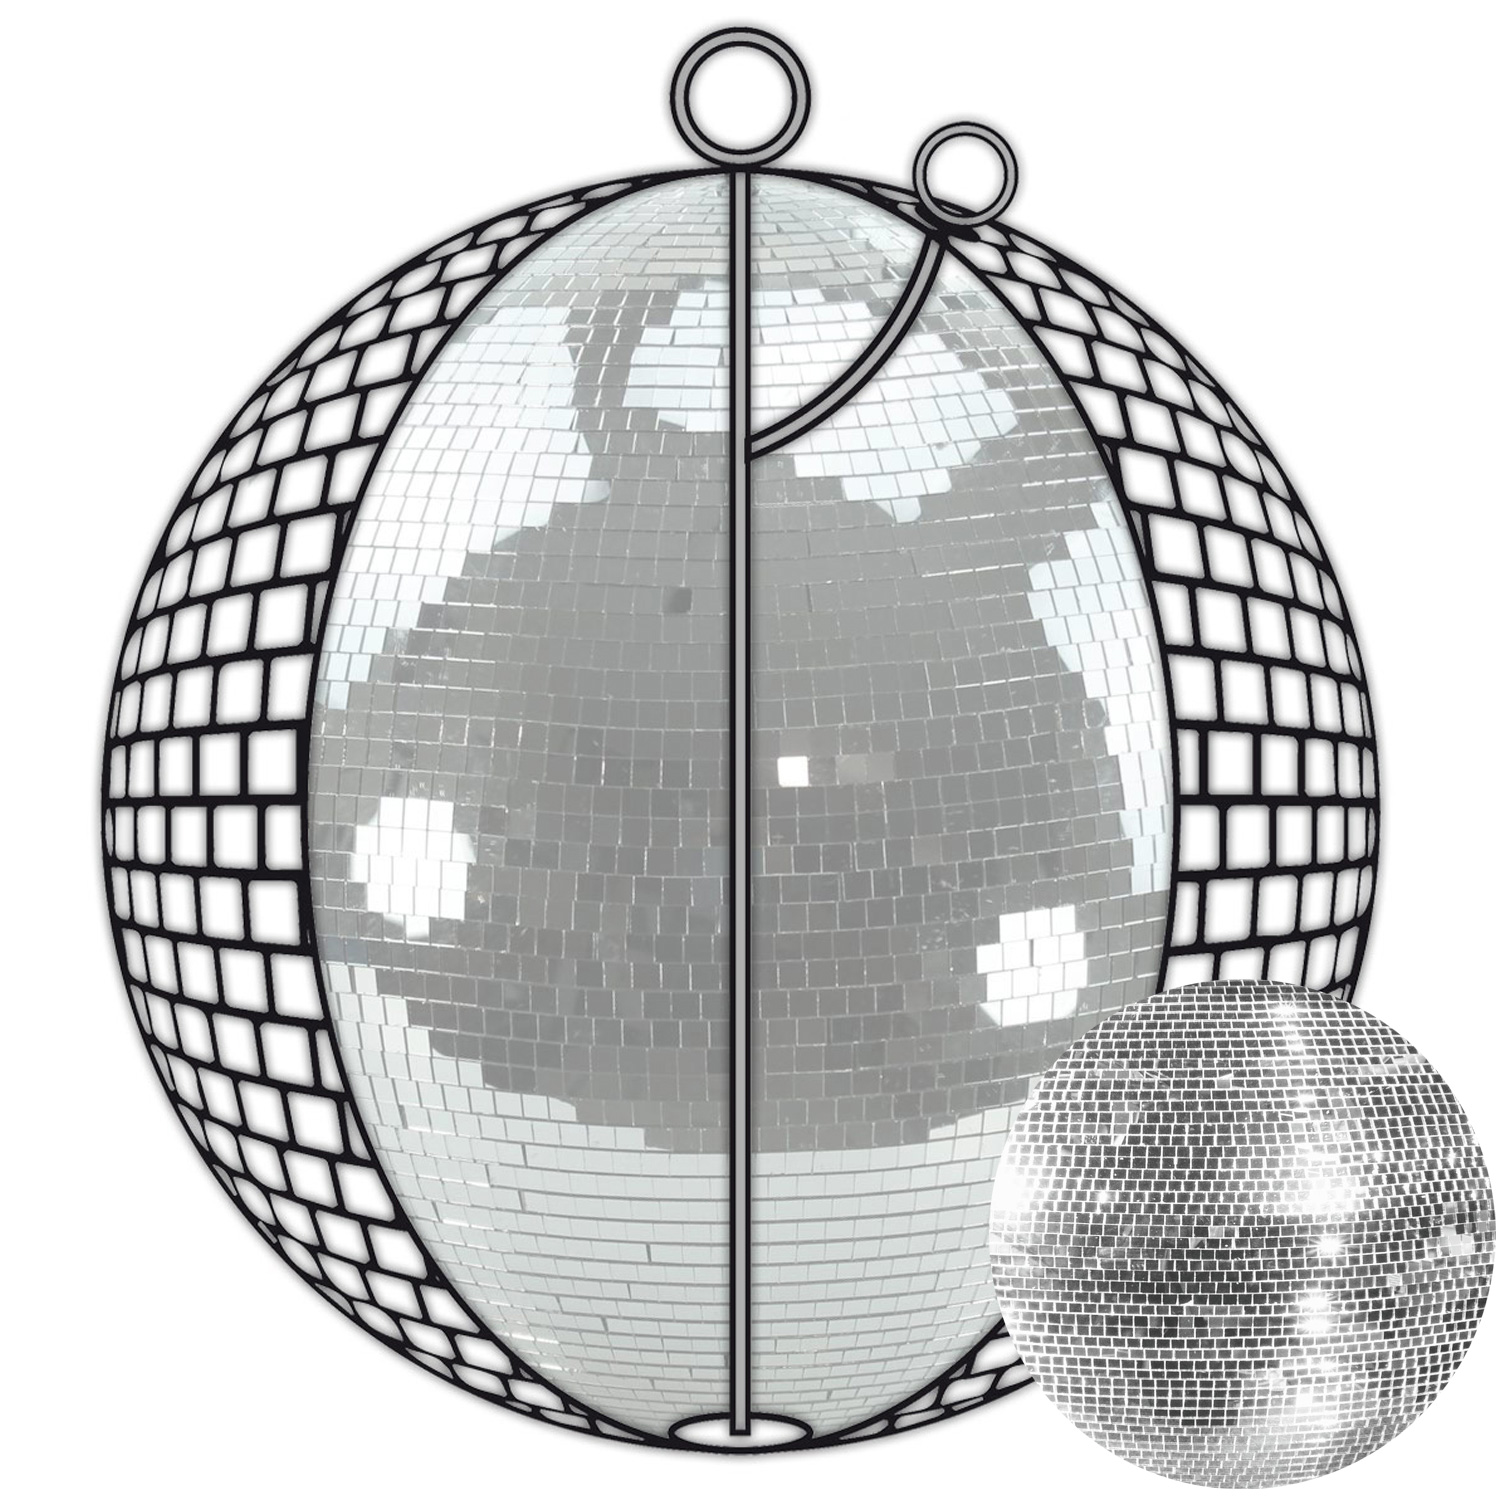 Spiegelkugel 100cm silber chrom- Diskokugel (Discokugel) Party Lichteffekt - Echtglas - mirrorball safety silver chrome color